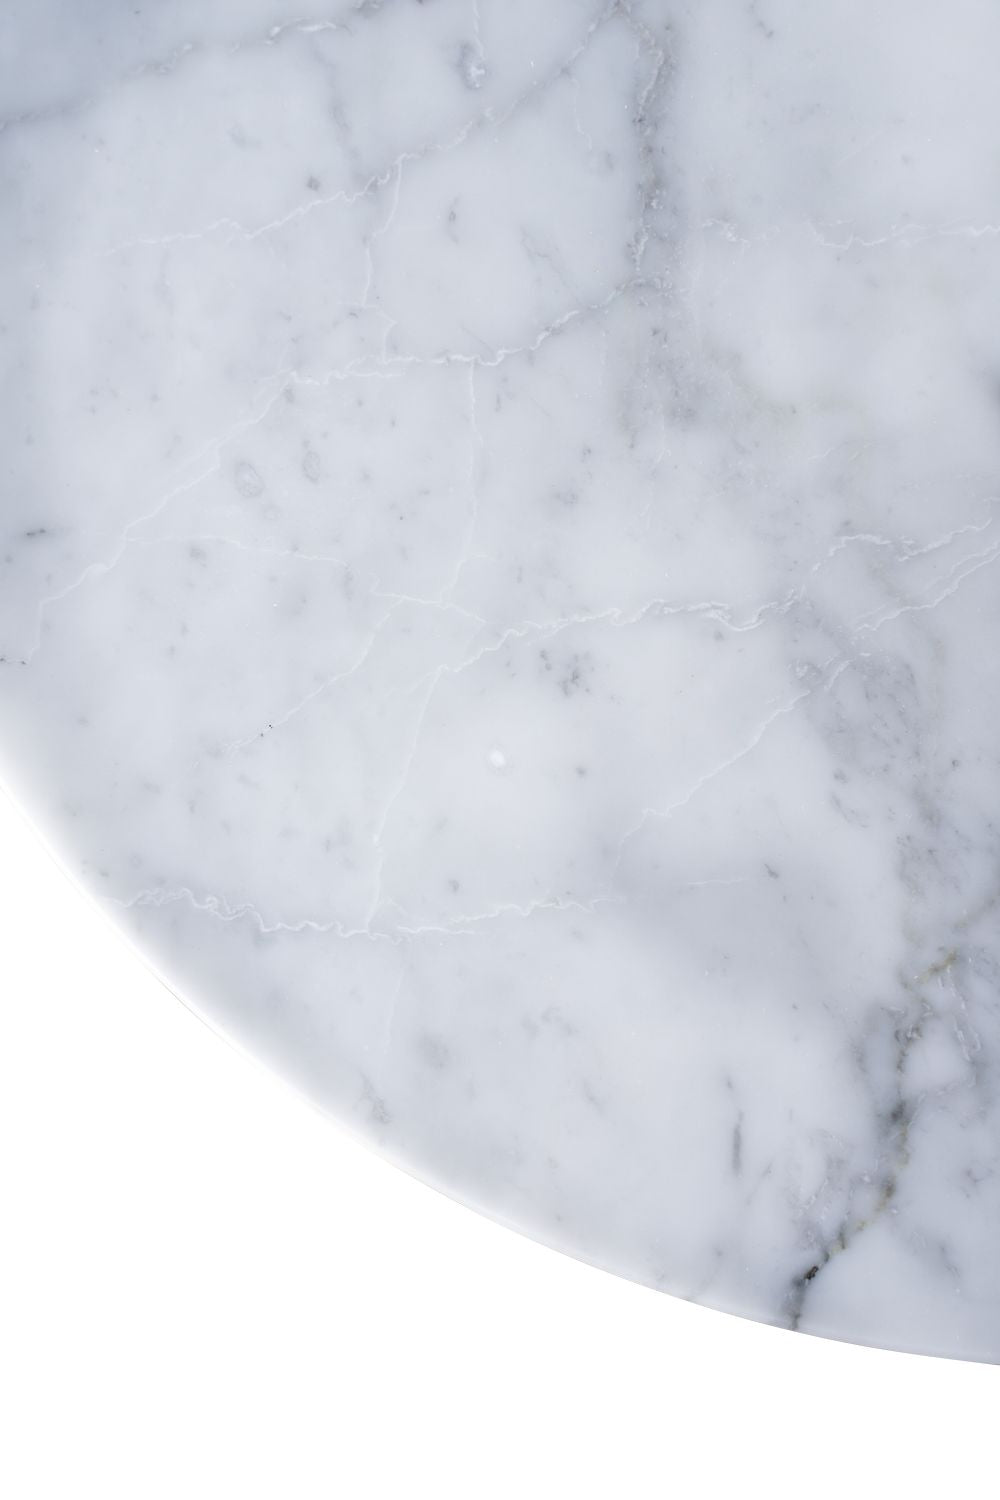 Bent Hansen Metro Coffee Table ø 45 Cm, White Carrara Marble